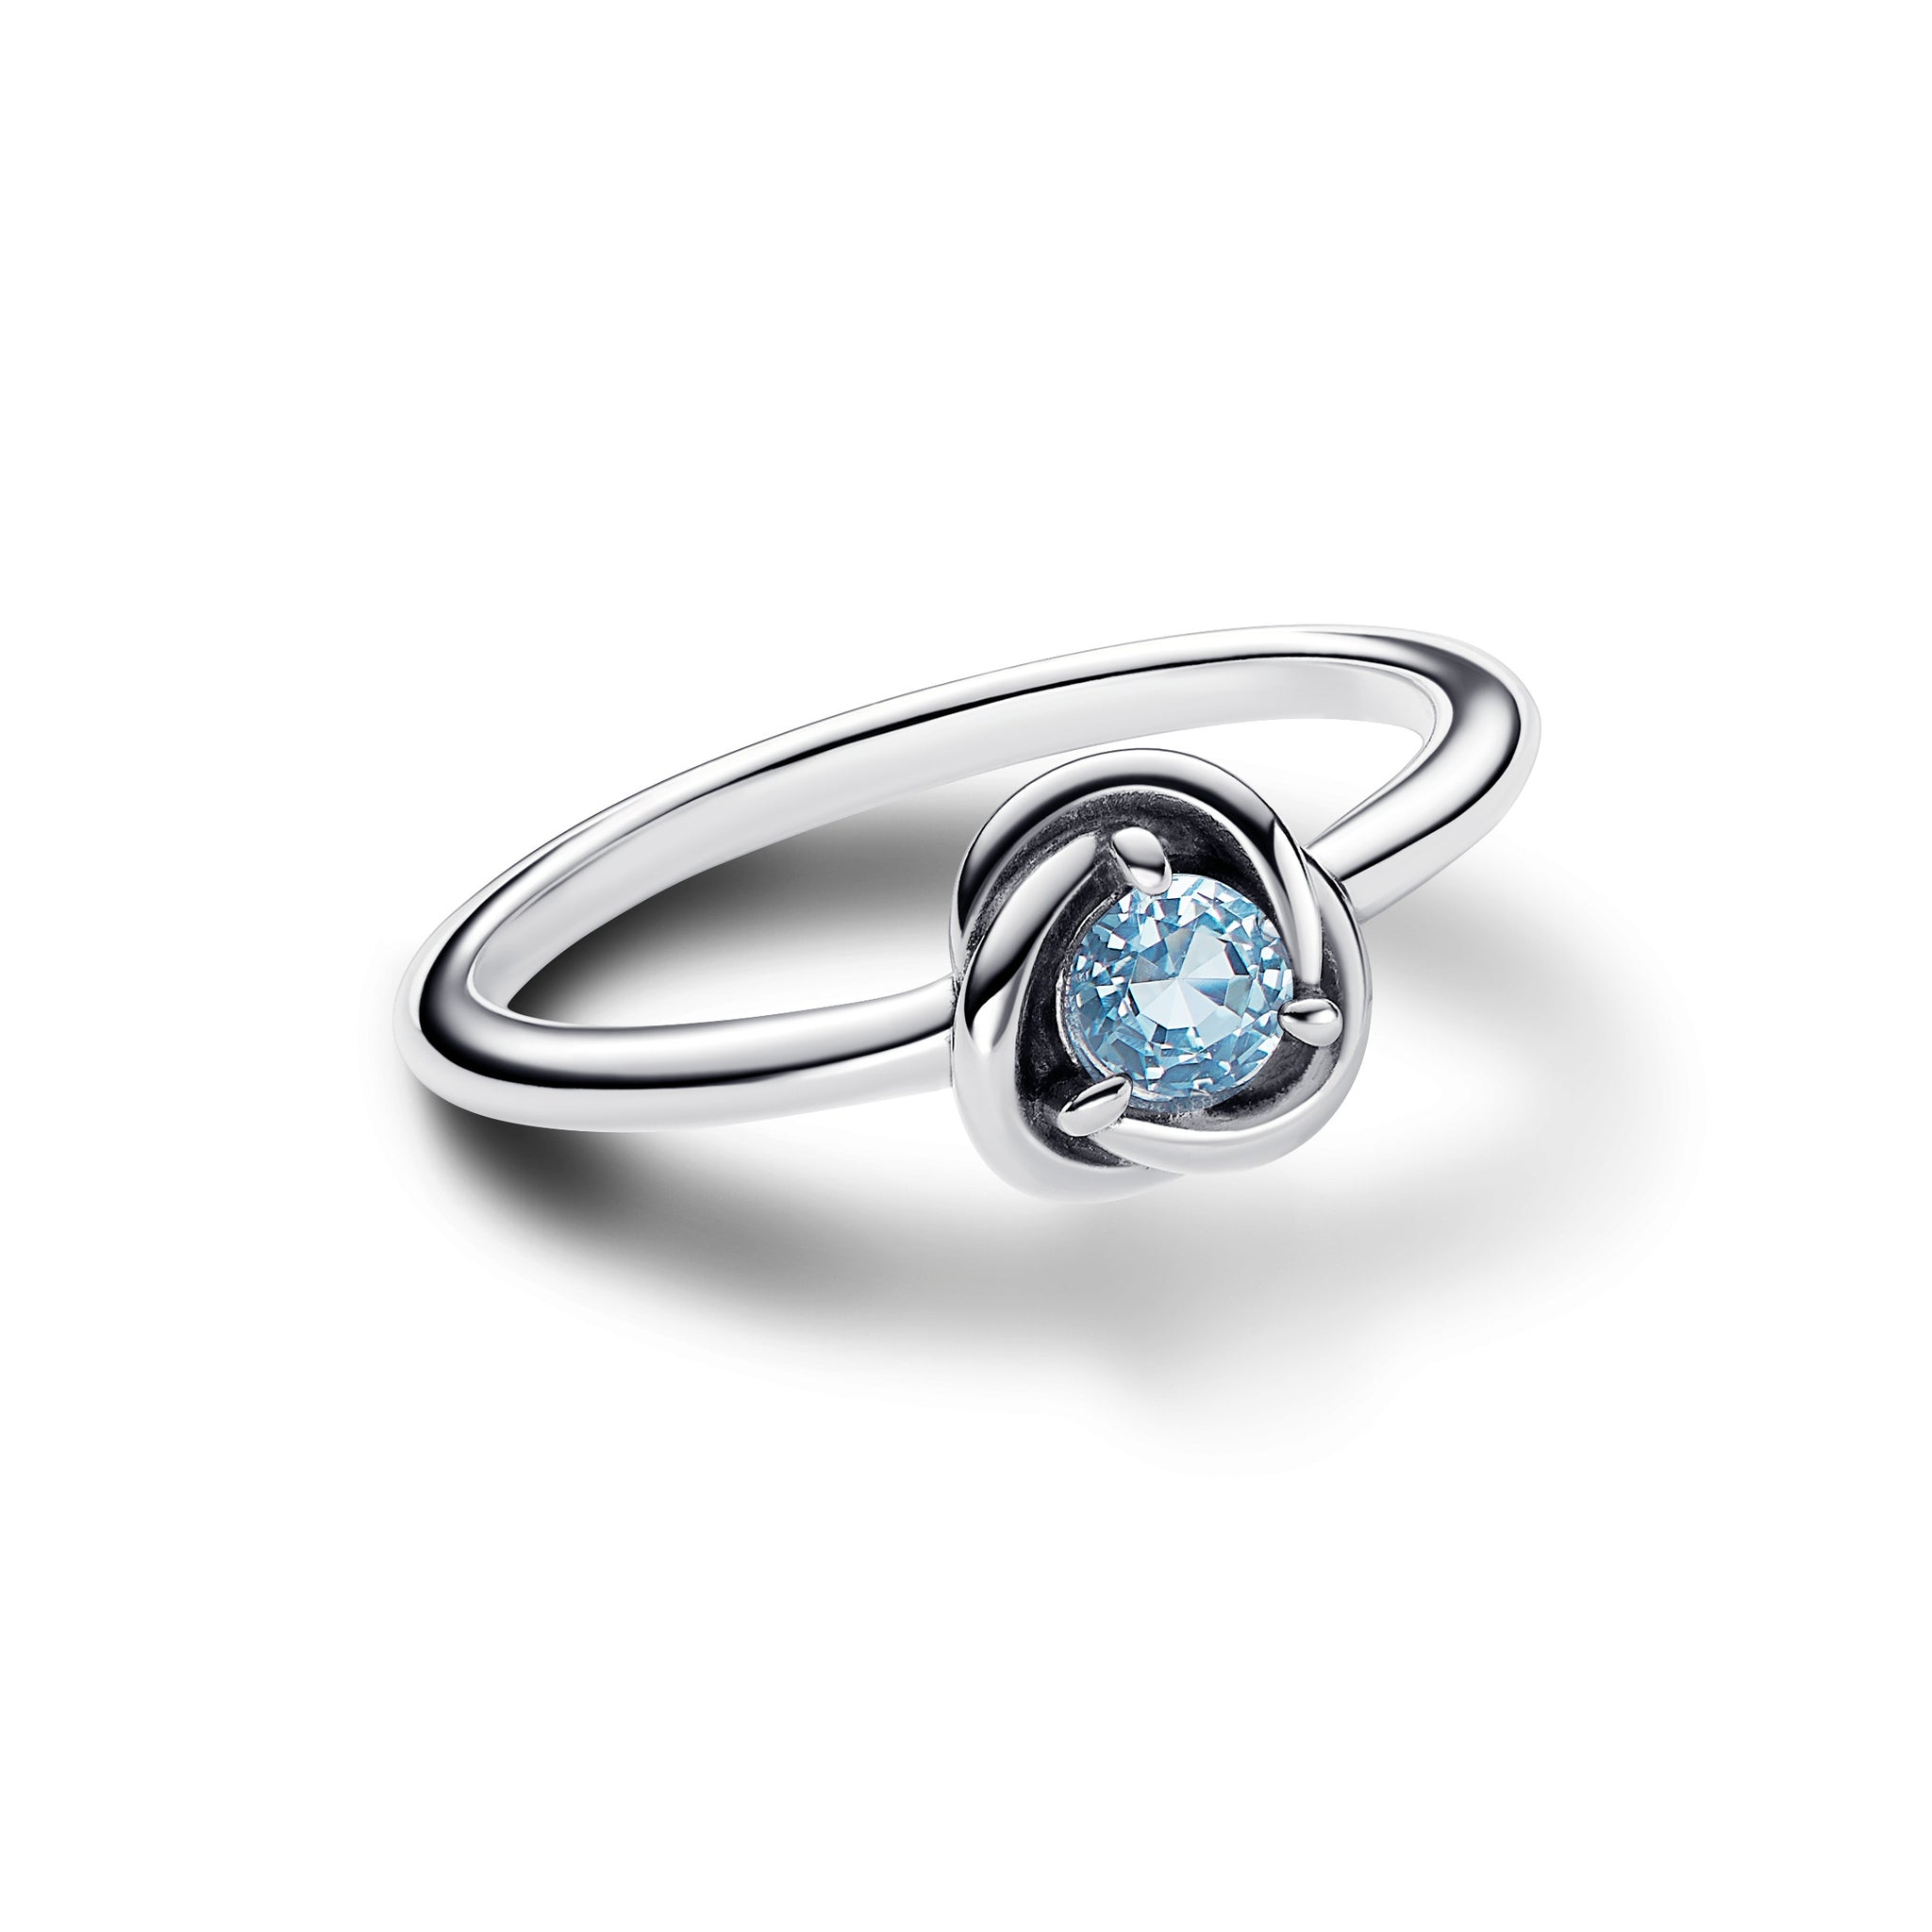 Buy Aqua blue chalcedony ring, Tear drop ring, Blue stone silver ring  online at aStudio1980.com